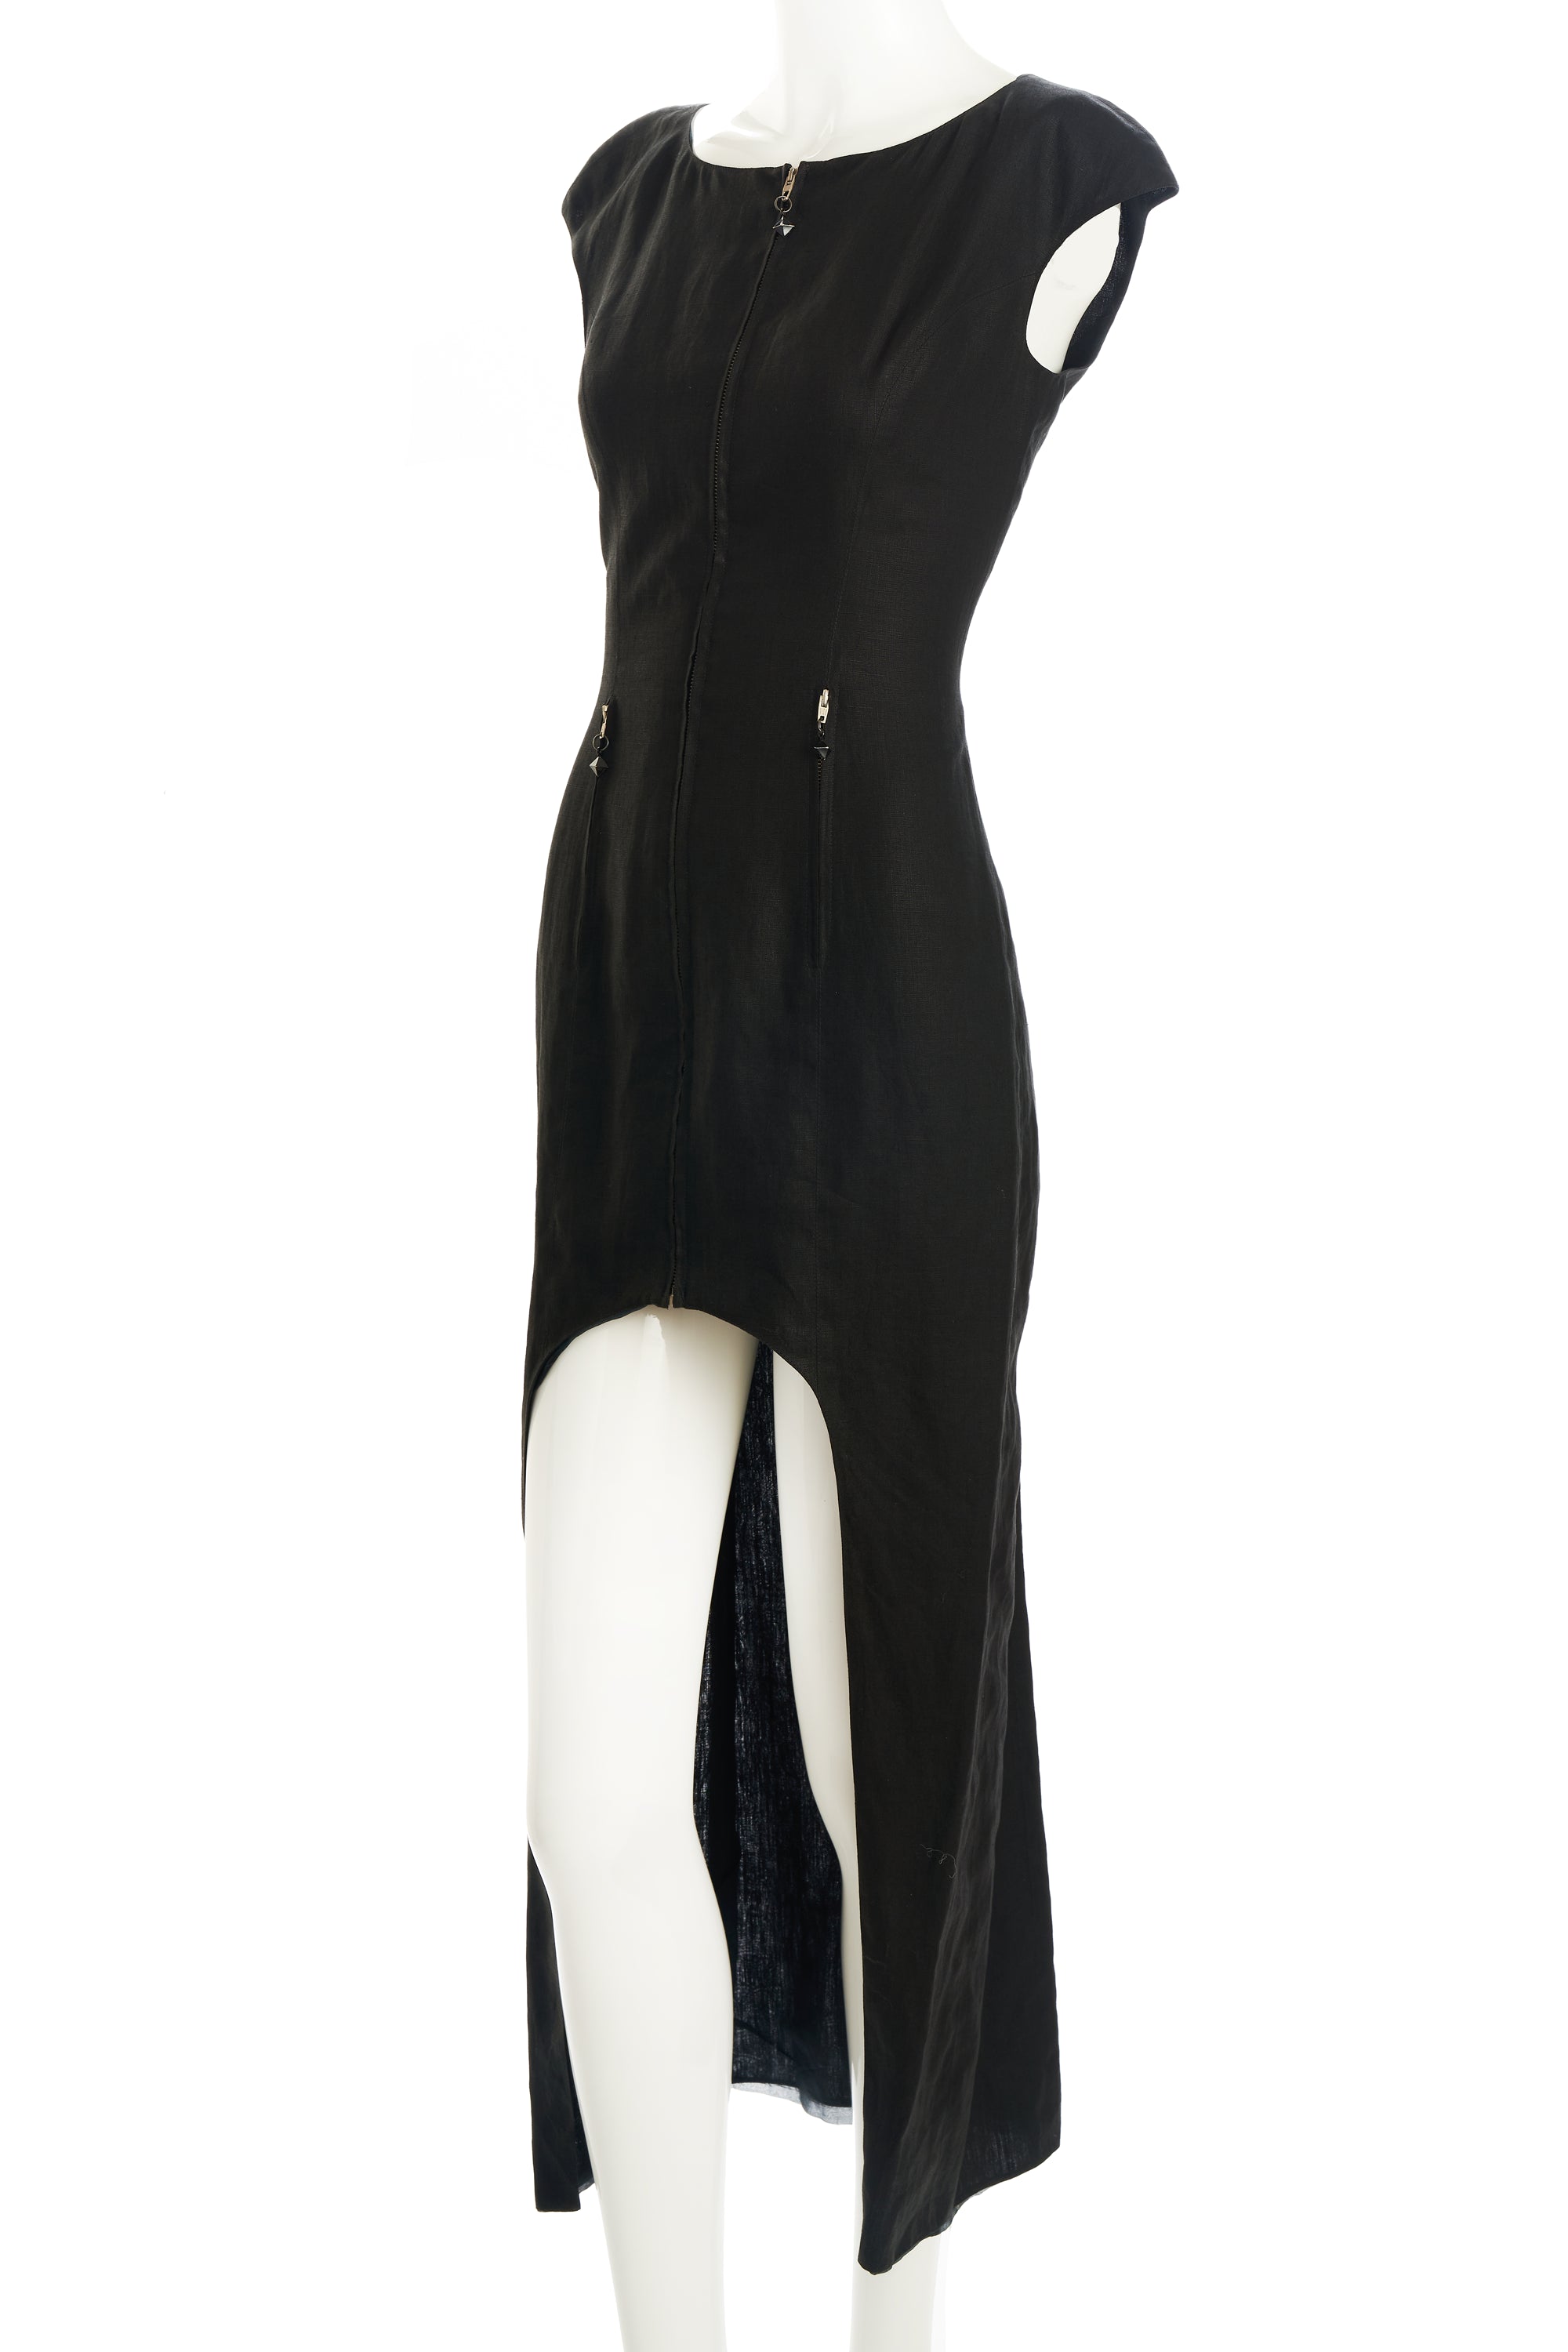 Montana Hi/Lo Black Linen Sleeveless Dress Size 40/6